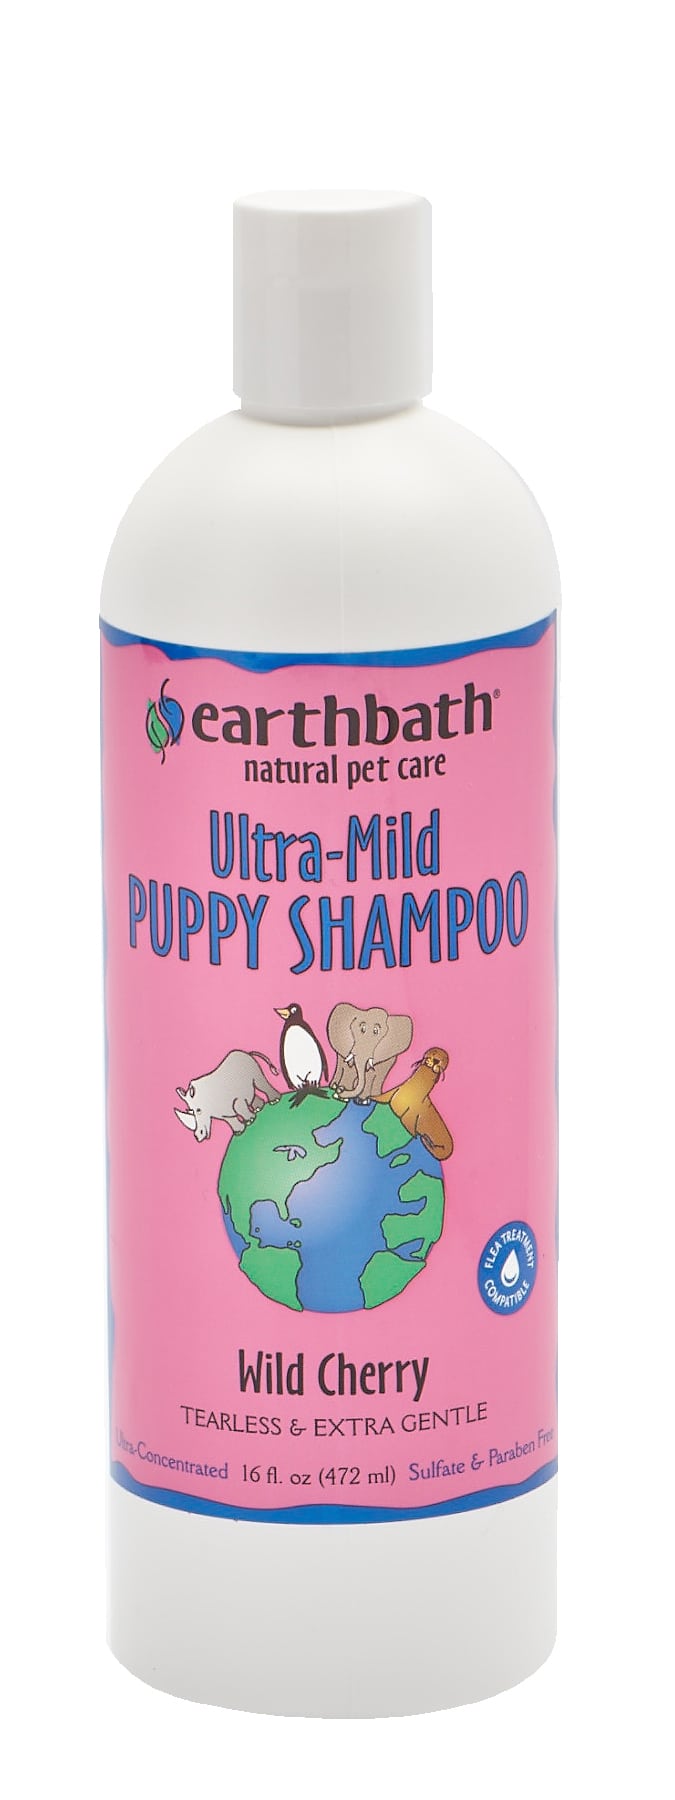 Earthbath 472ml Ultra-Mild Puppy Shampoo Wild Cherry